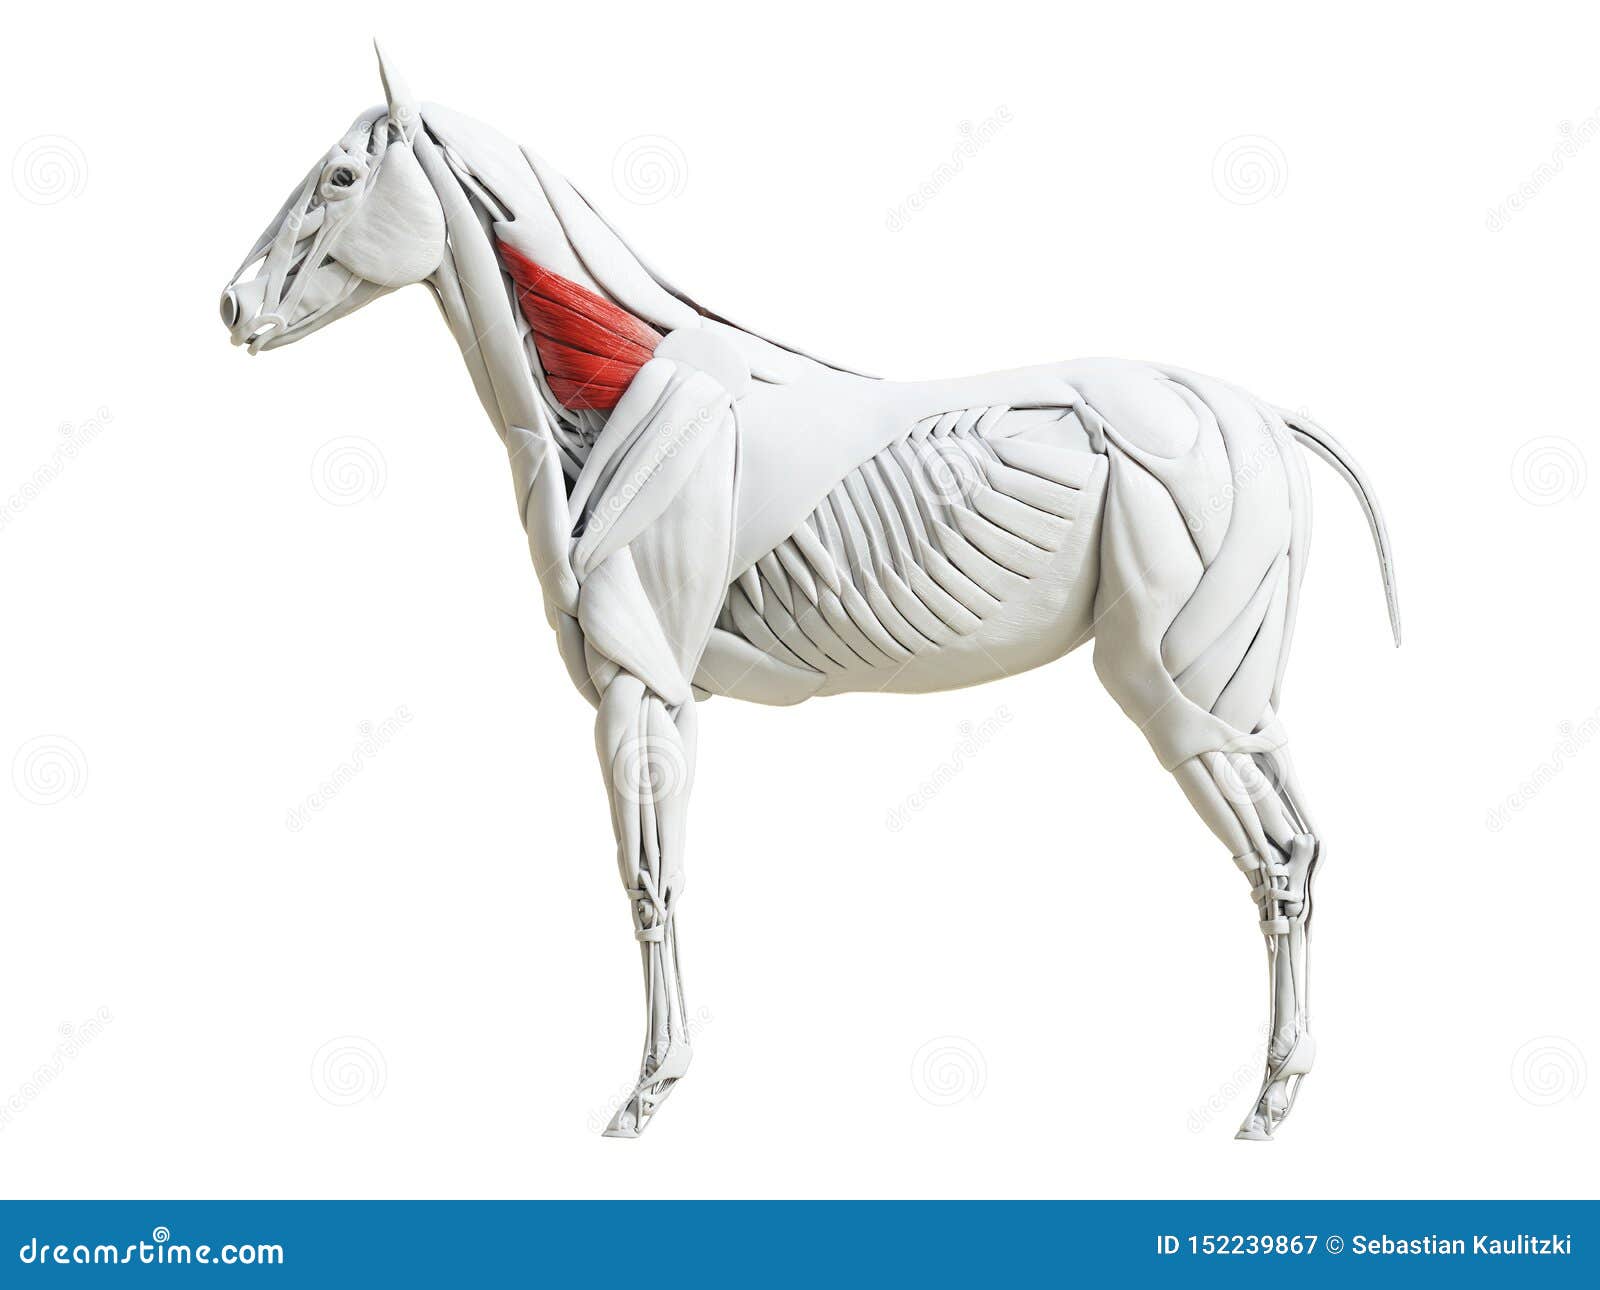 the equine muscle anatomy - serratus ventralis